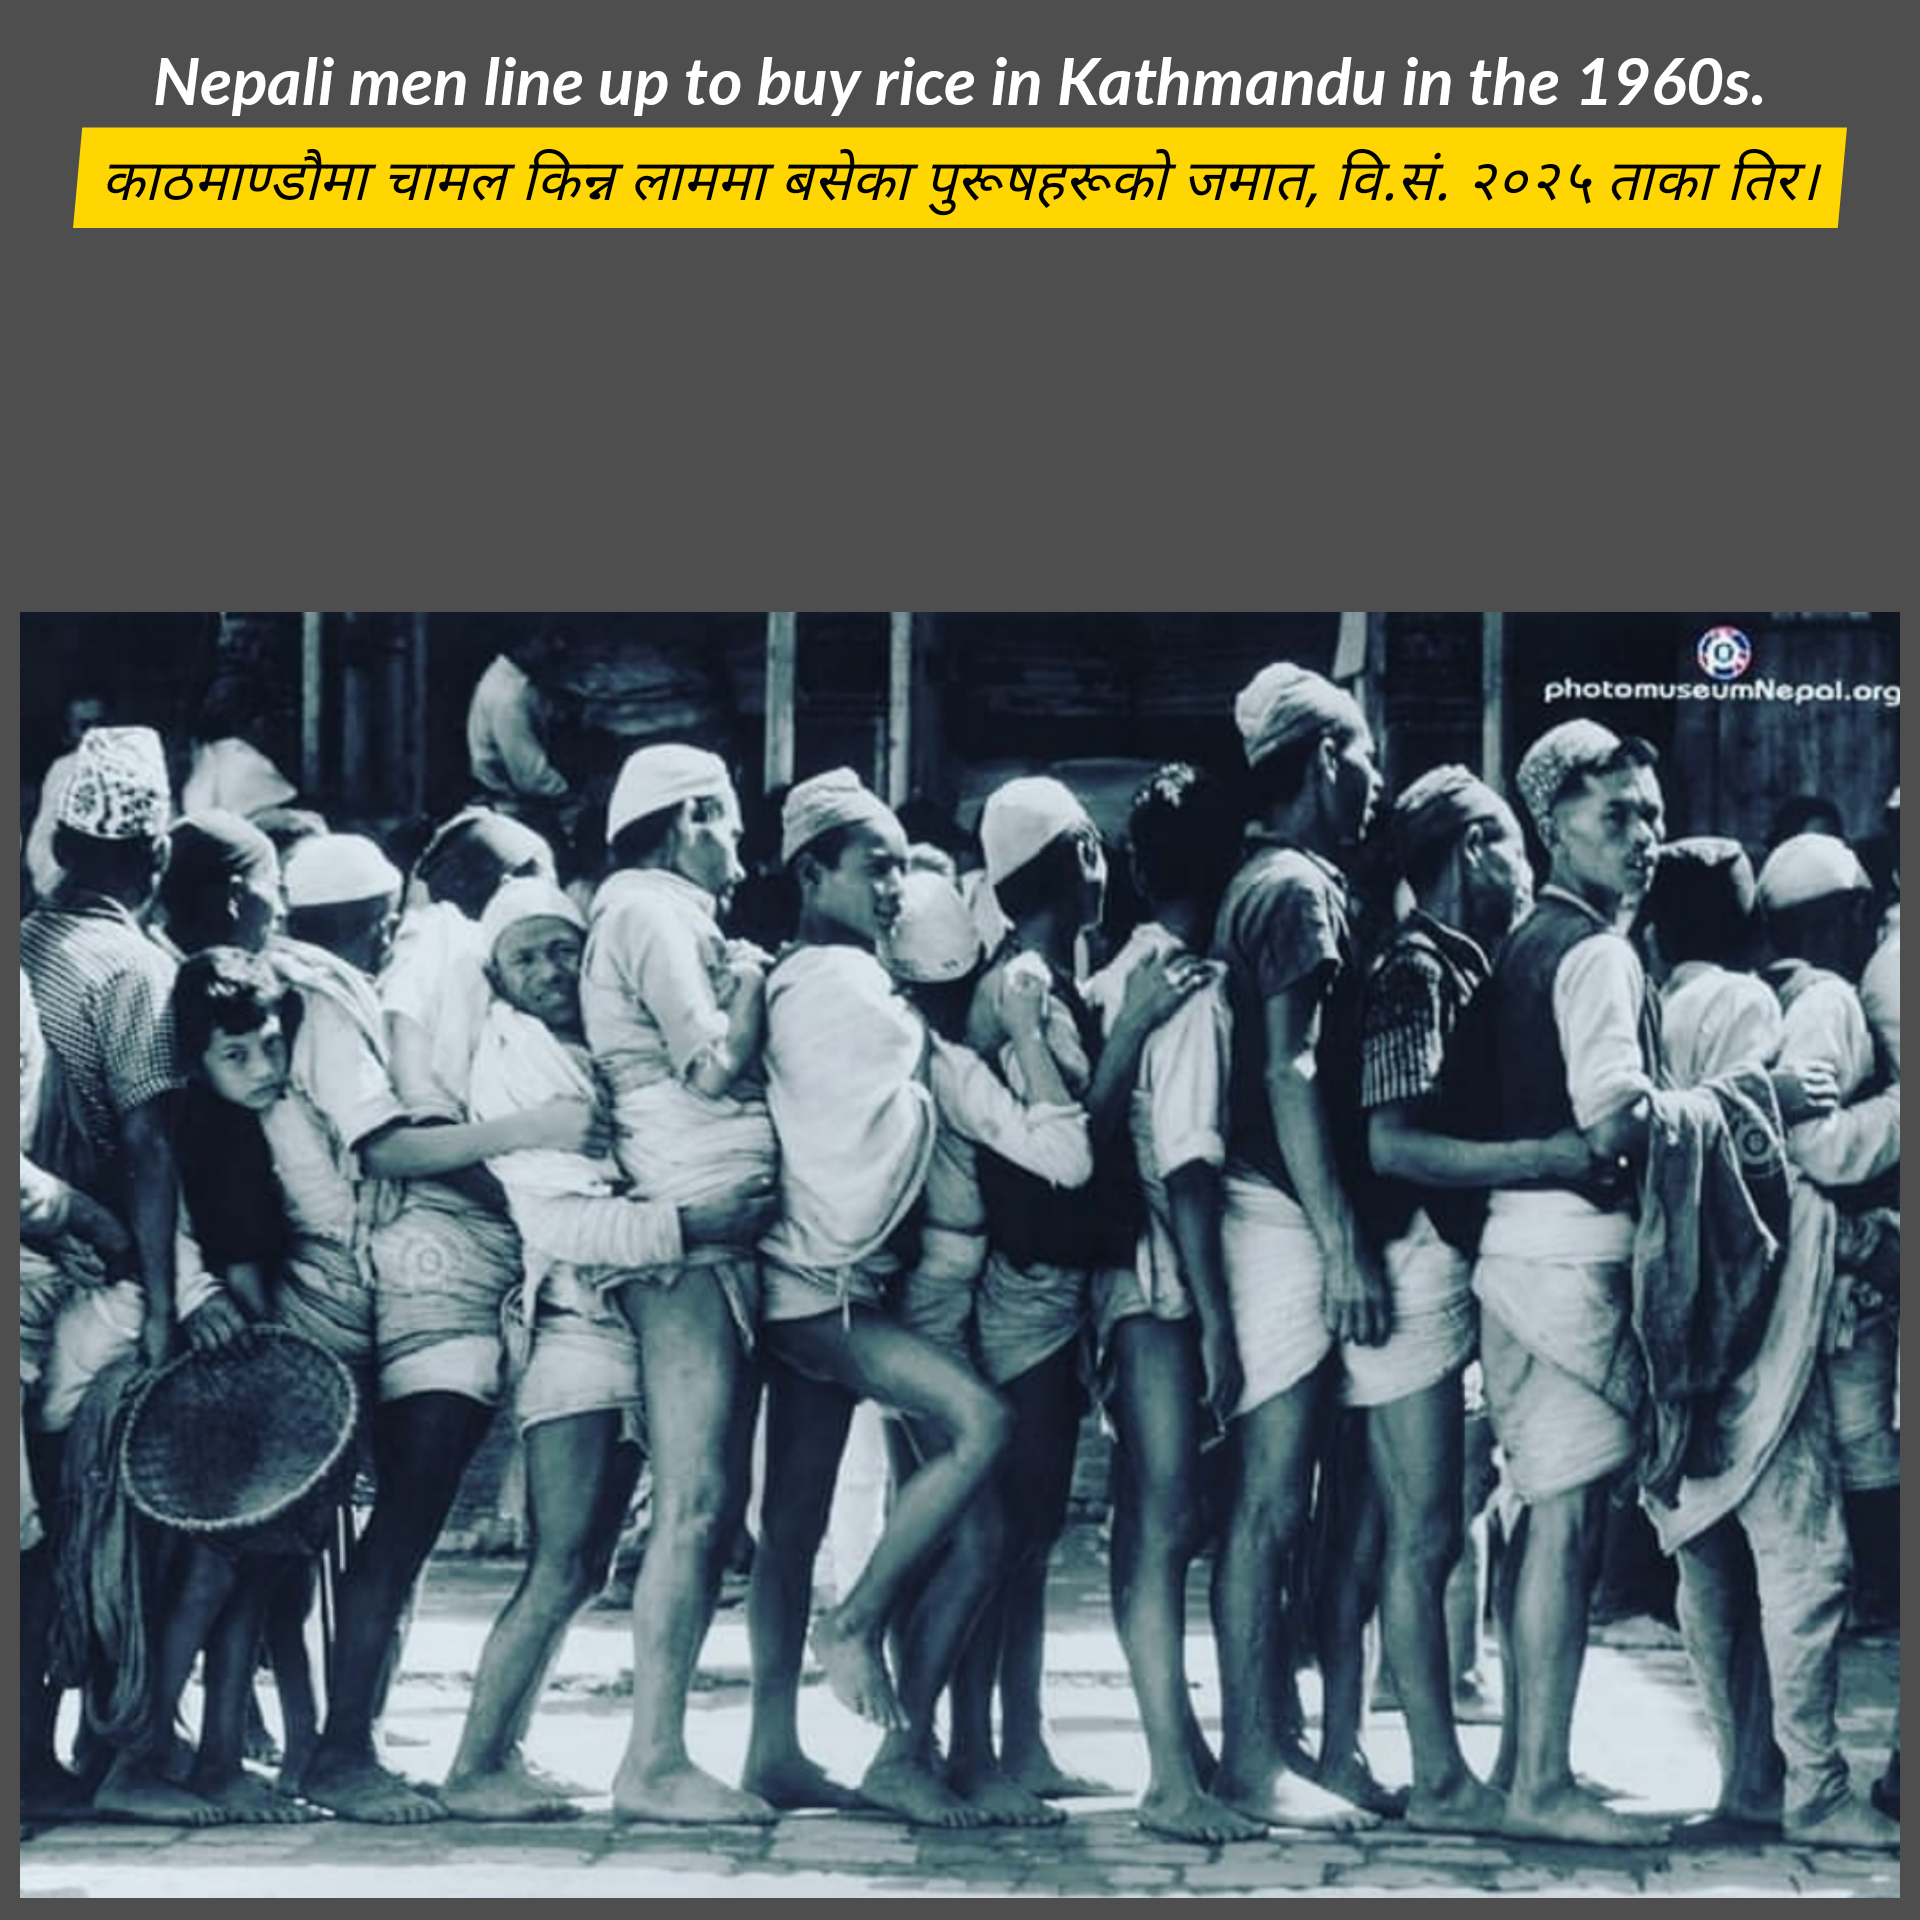 Buying rice was tough in Kathmandu in 1960s.